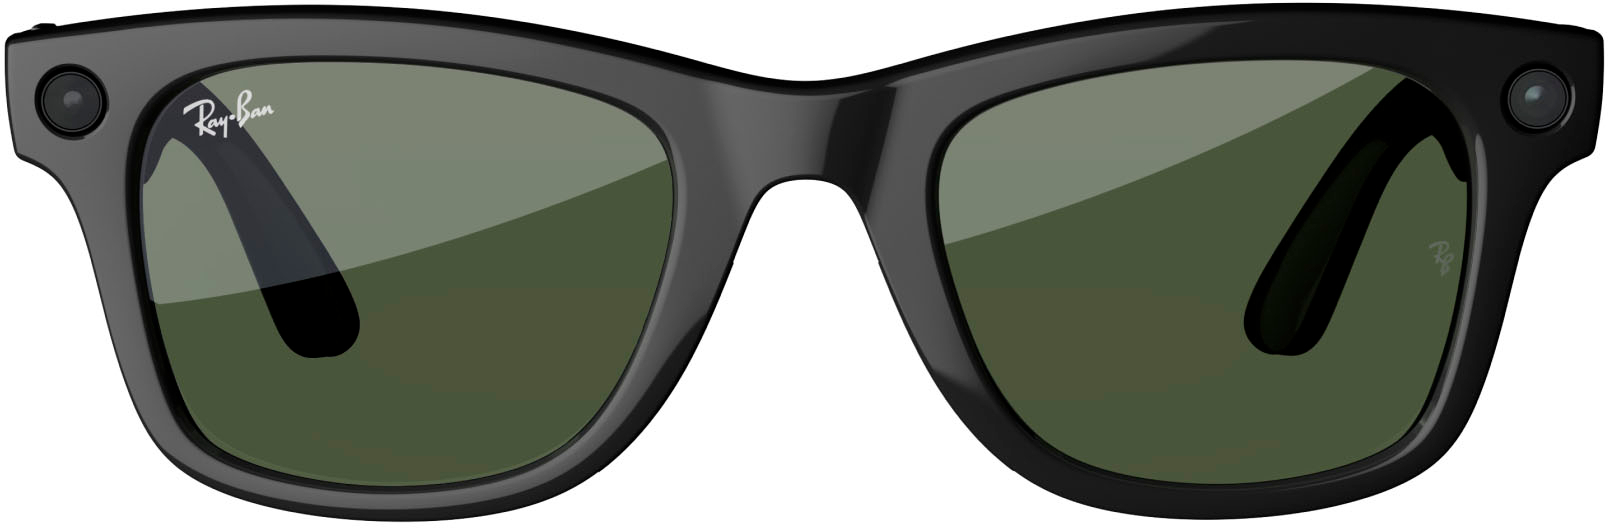 RAY-BAN, META WAYFARER Sunglasses in Black and Green 